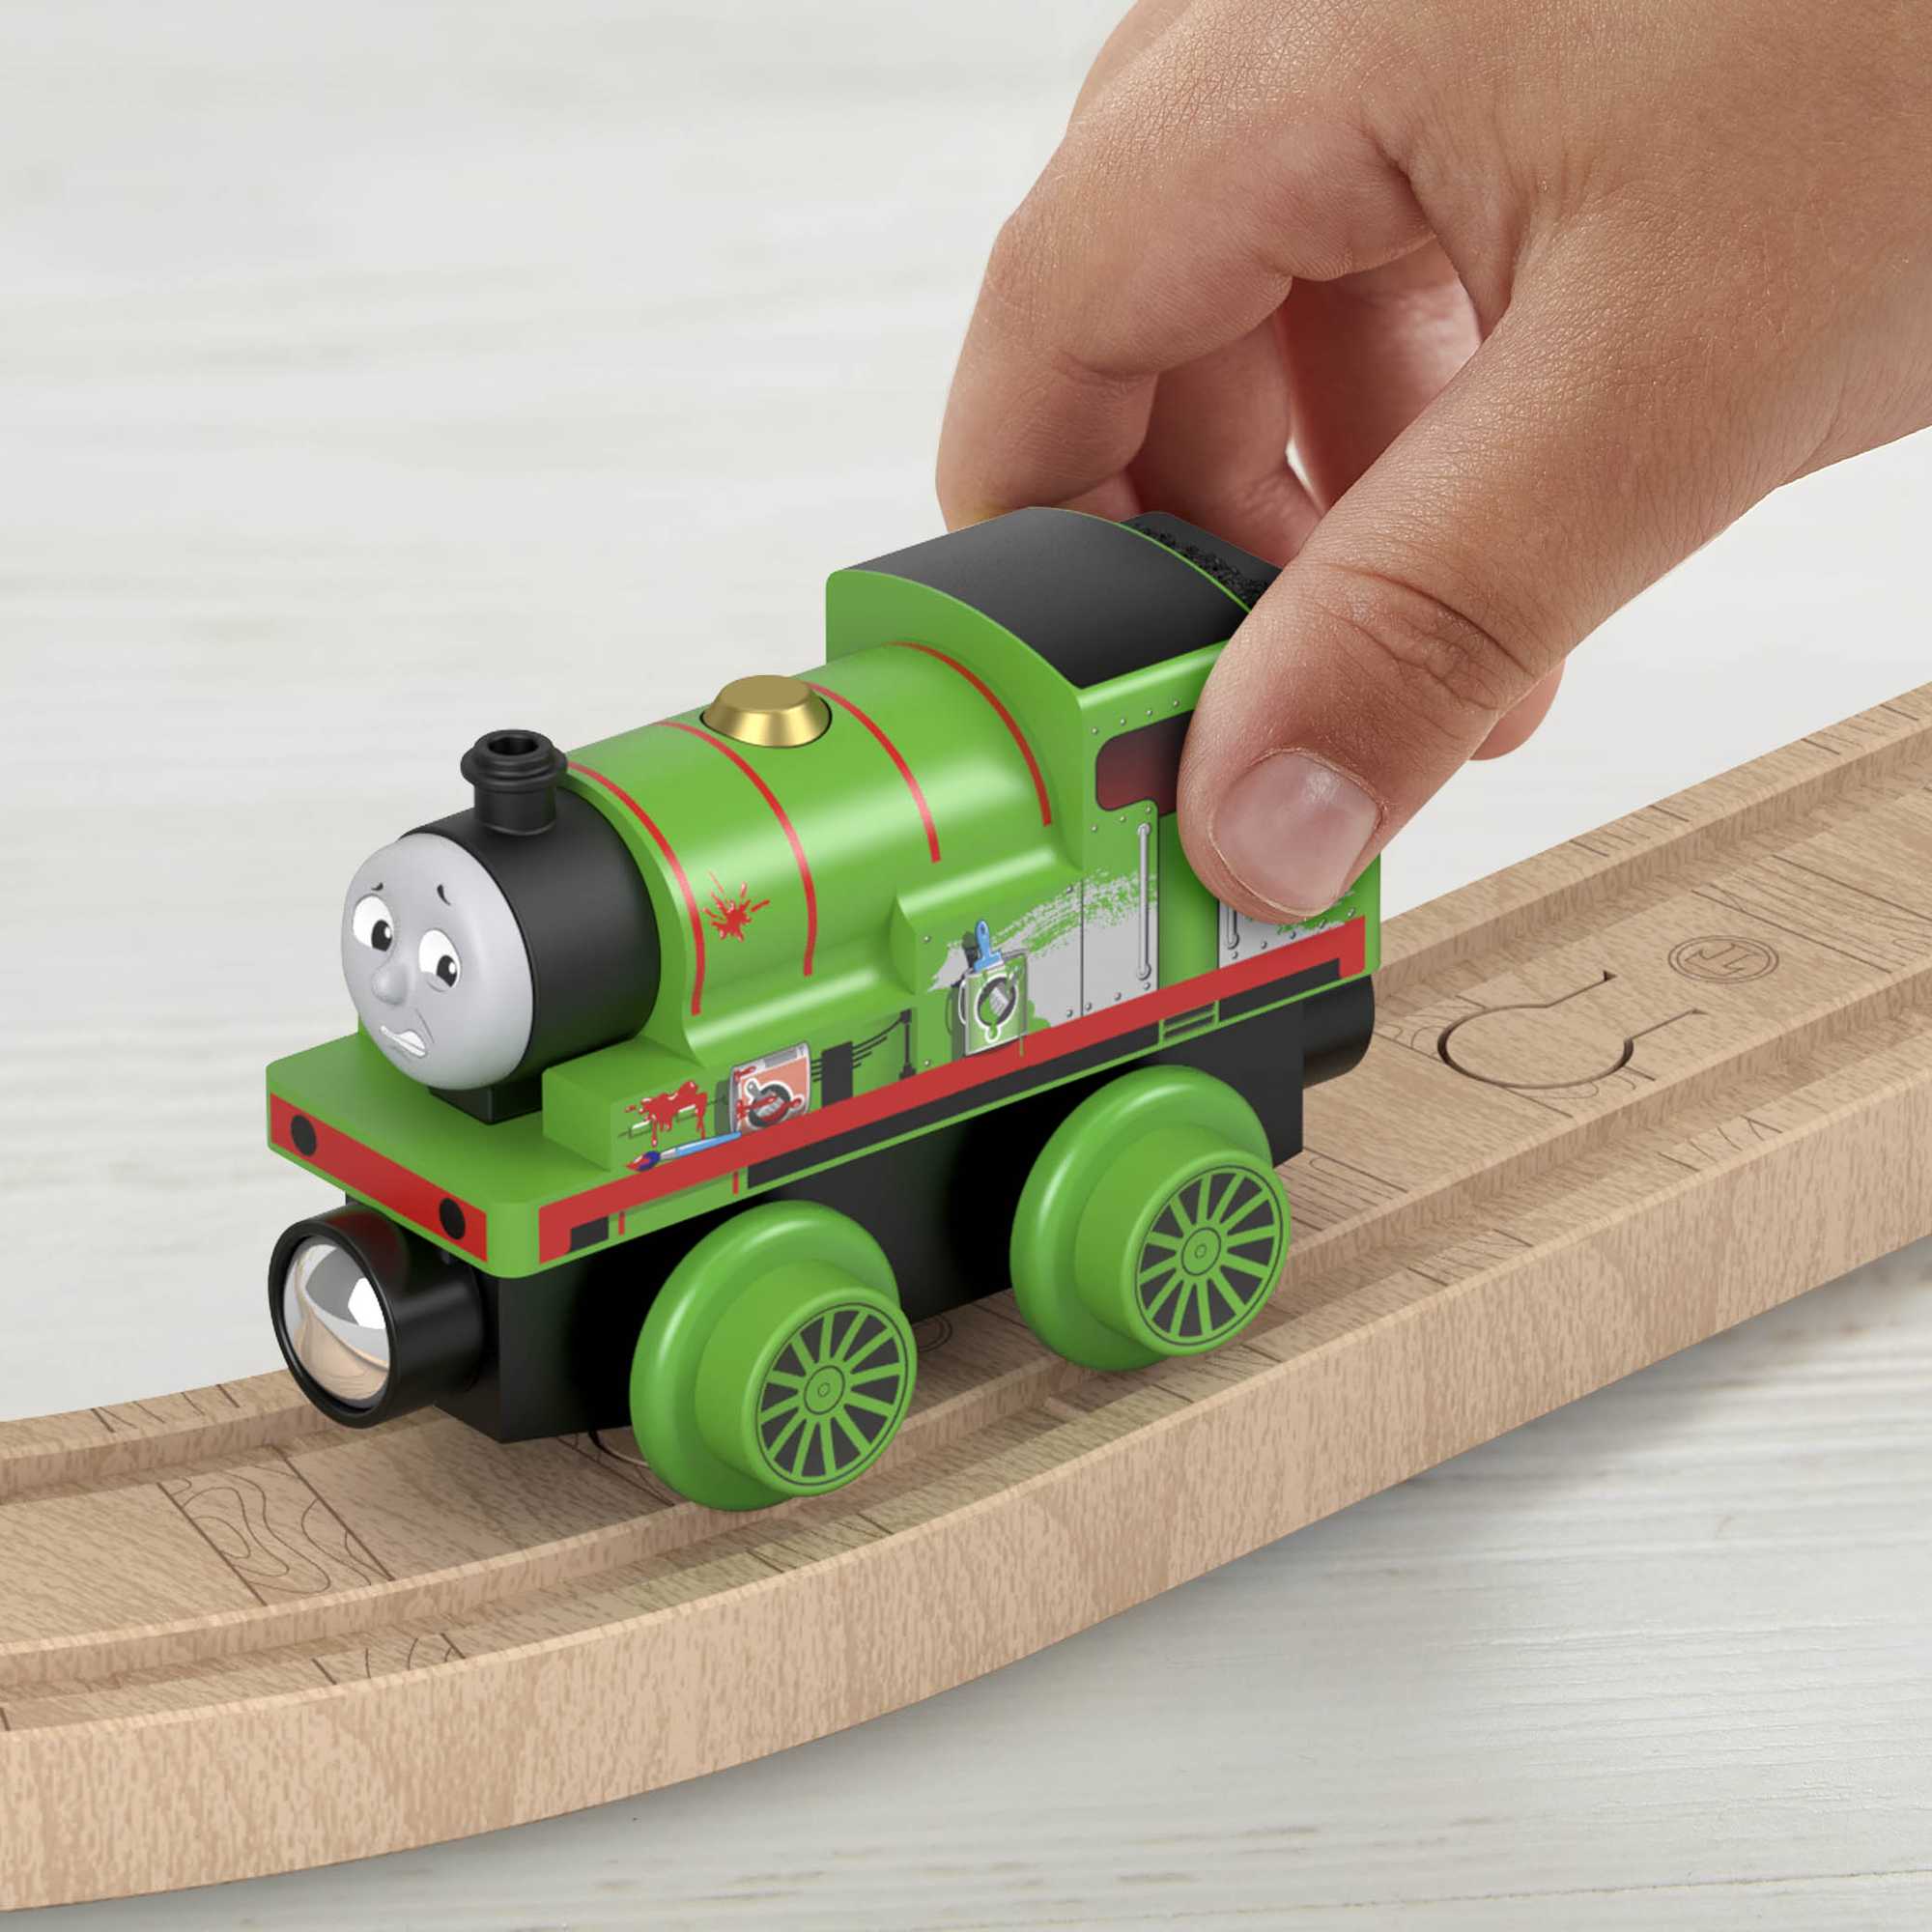 Thomas & Friends Wooden Railway